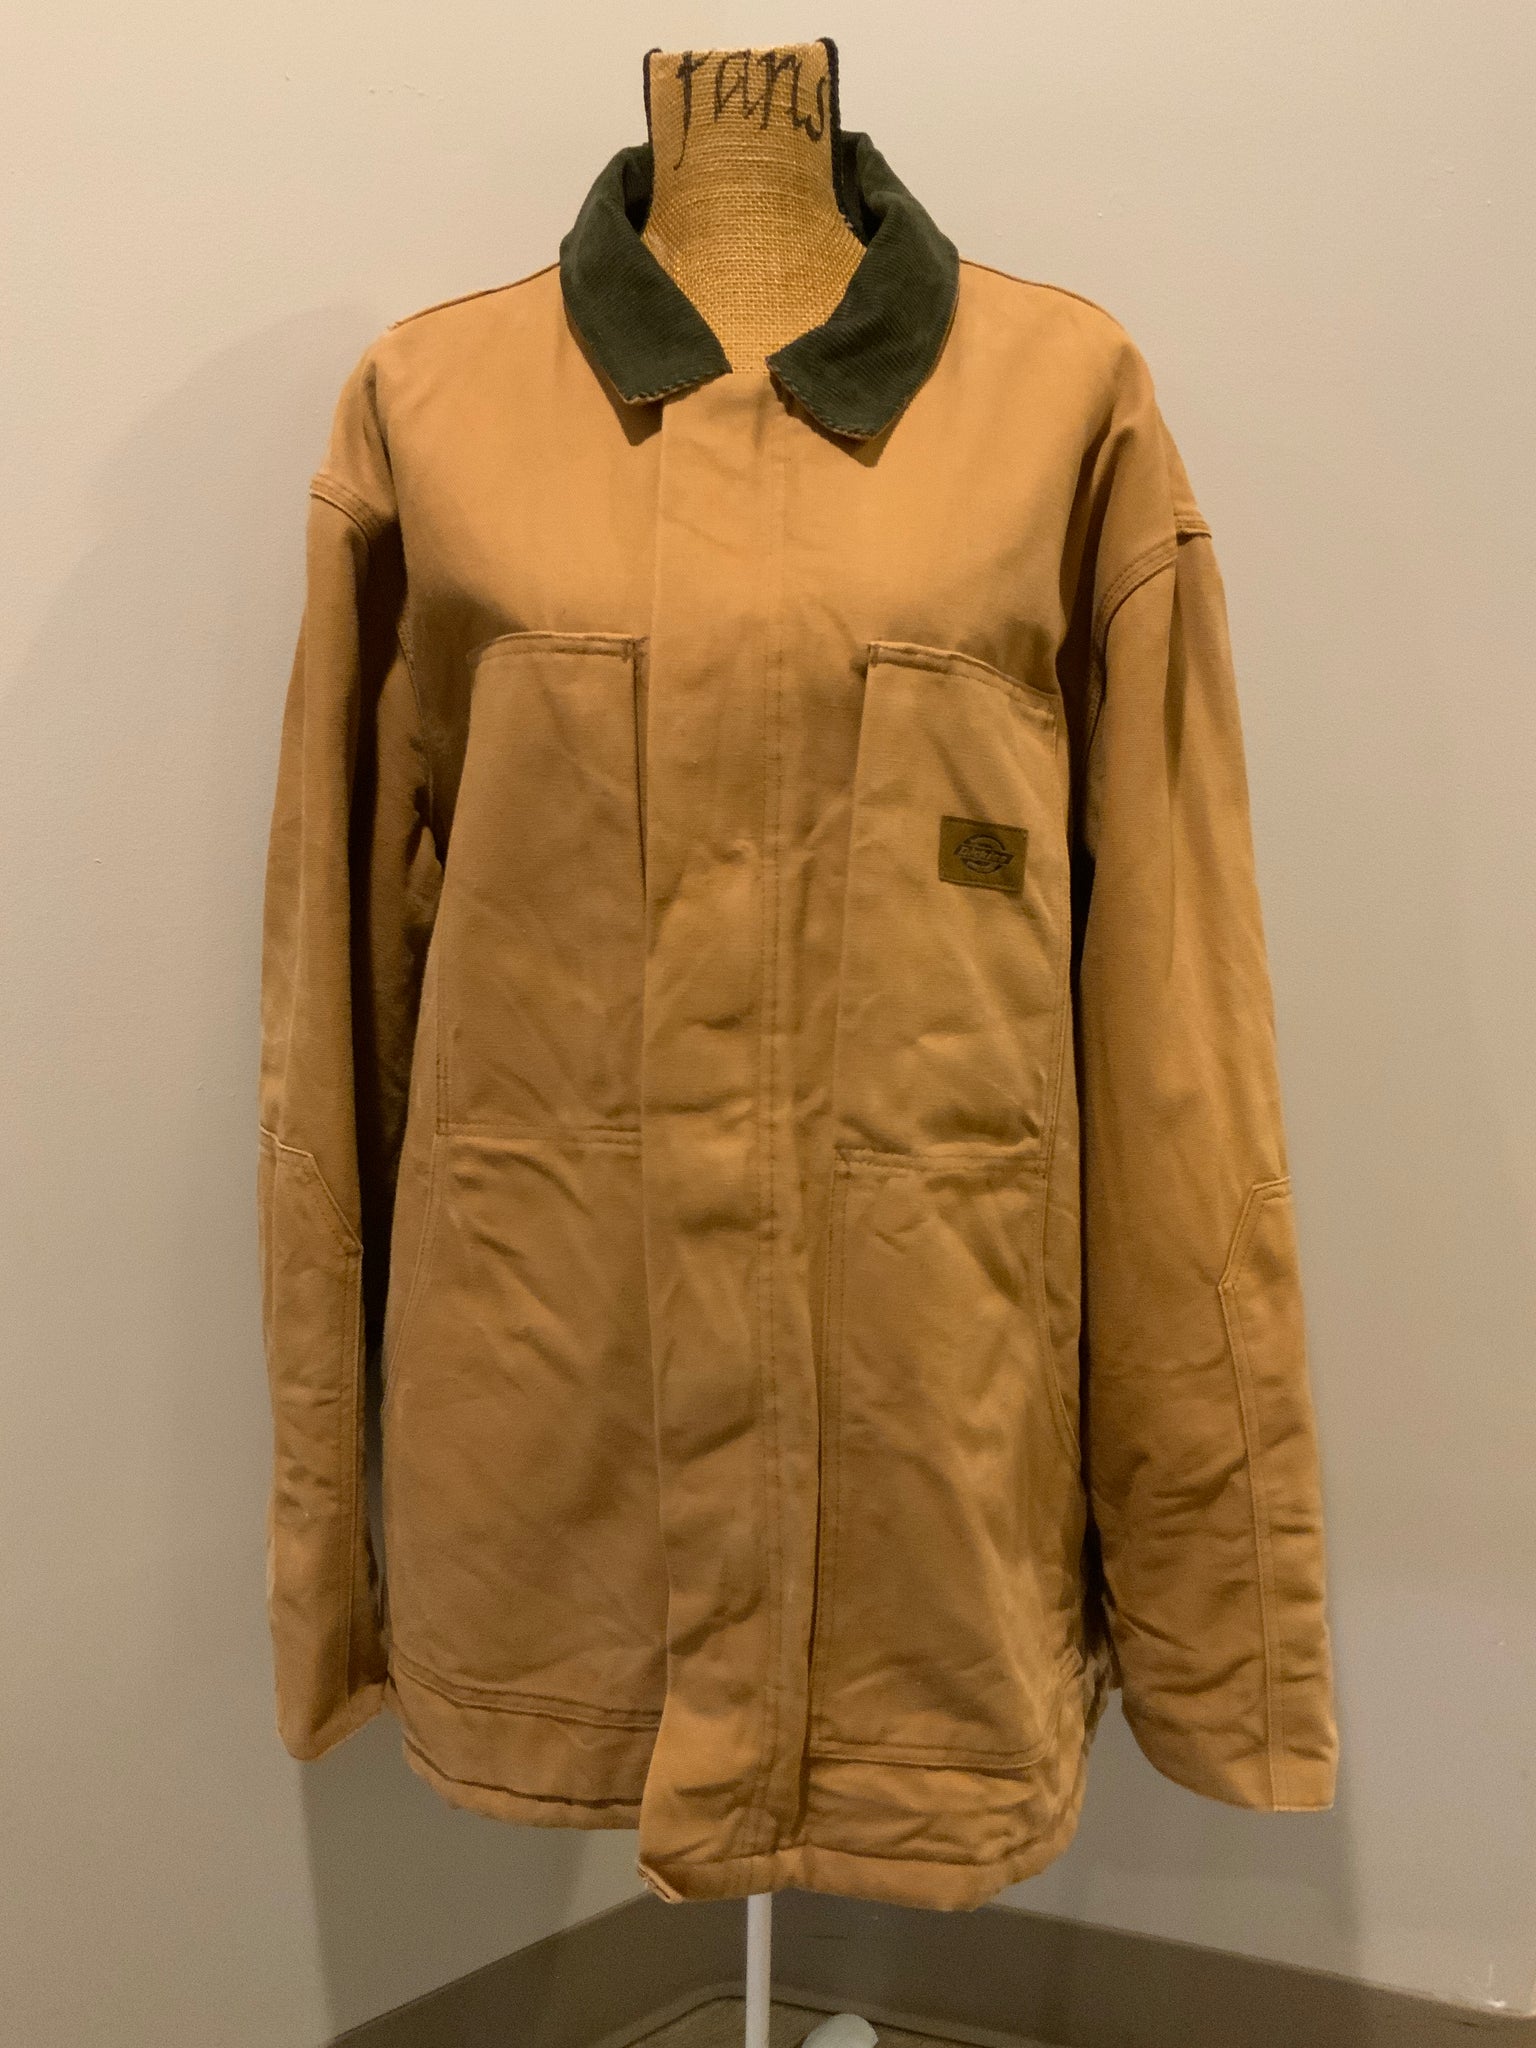 Carhartt Women's Carhartt Brown Canvas Work Jacket (Medium) in the Work  Jackets & Coats department at